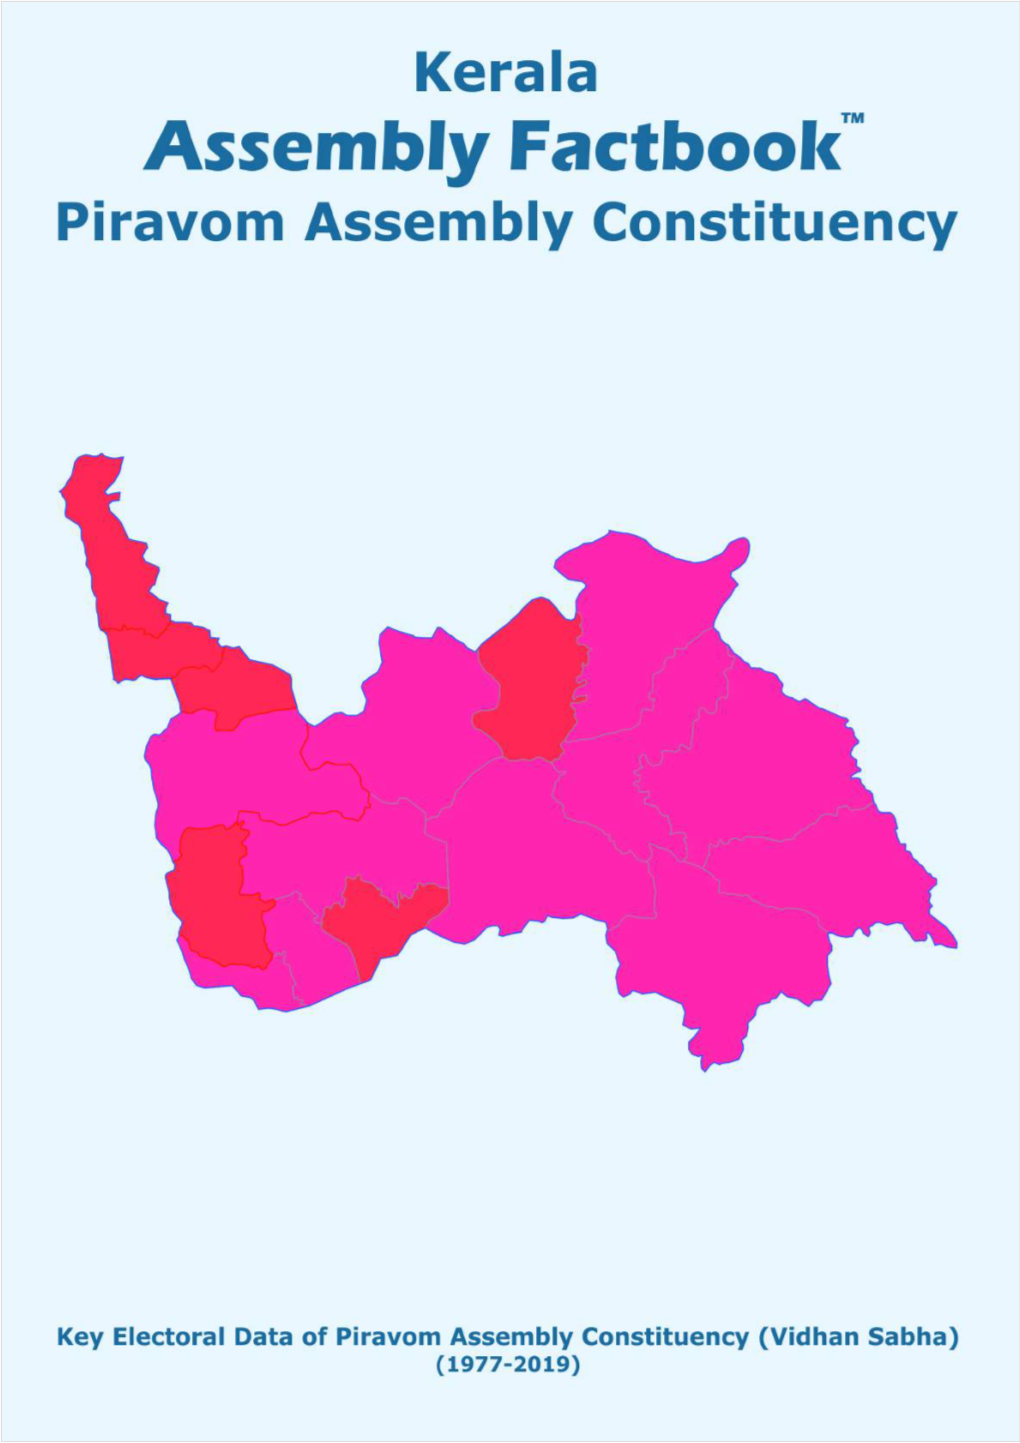 Piravom Assembly Kerala Factbook